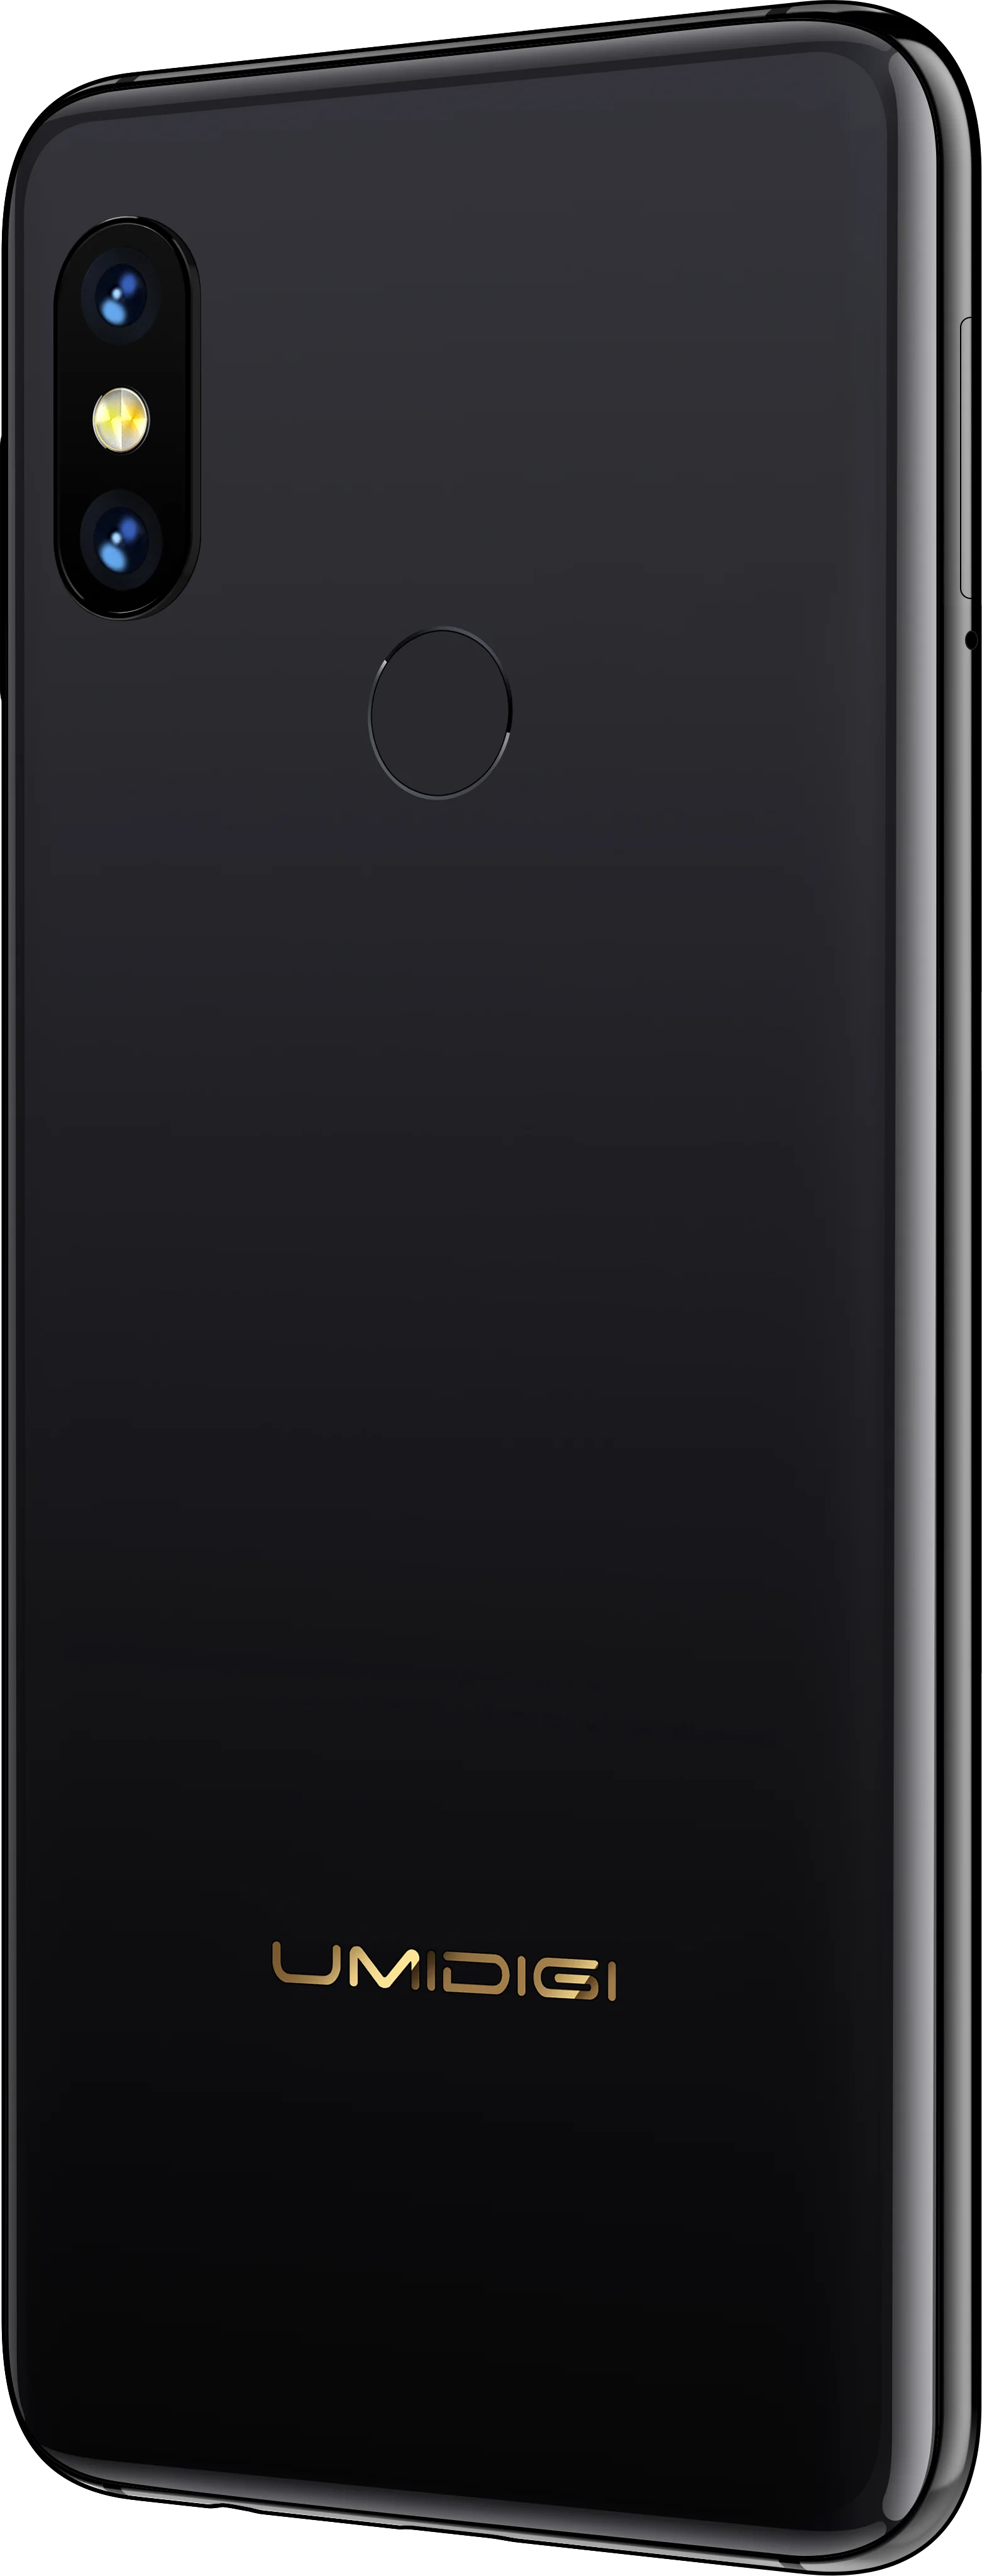 UMIDIGI S3 PRO Android 9,0 48MP+ 12MP+ 20MP супер камера 5150mAh большая мощность 128GB 6GB 6," FHD+ NFC керамический смартфон